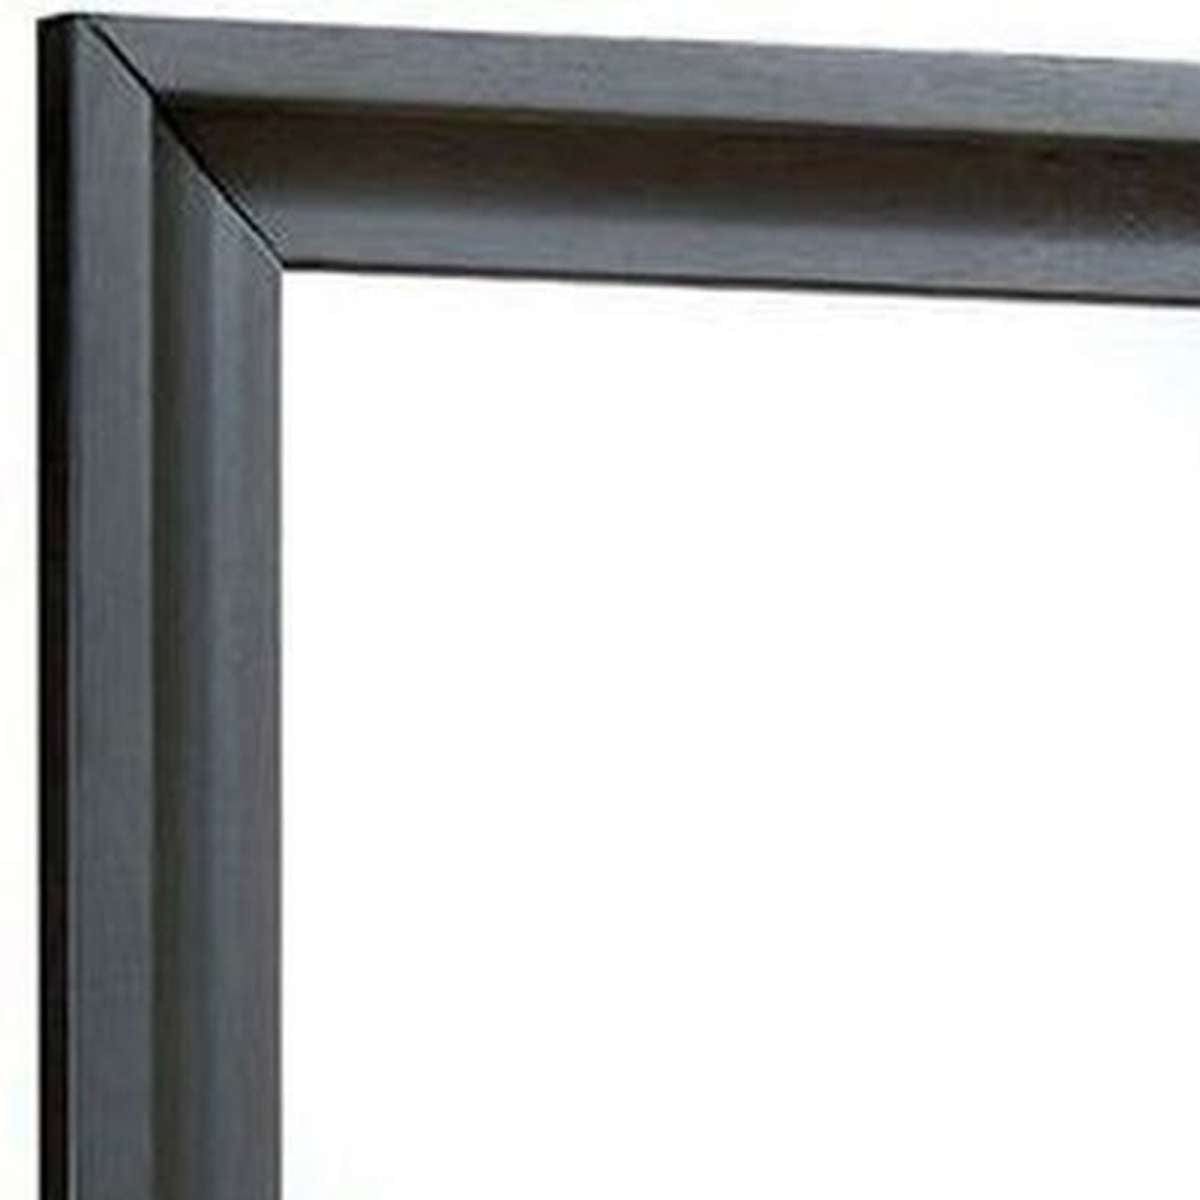 Benzara 32 Inch Transitional Style Wooden Frame Mirror, Antique Gray By Benzara Mirrors BM233735